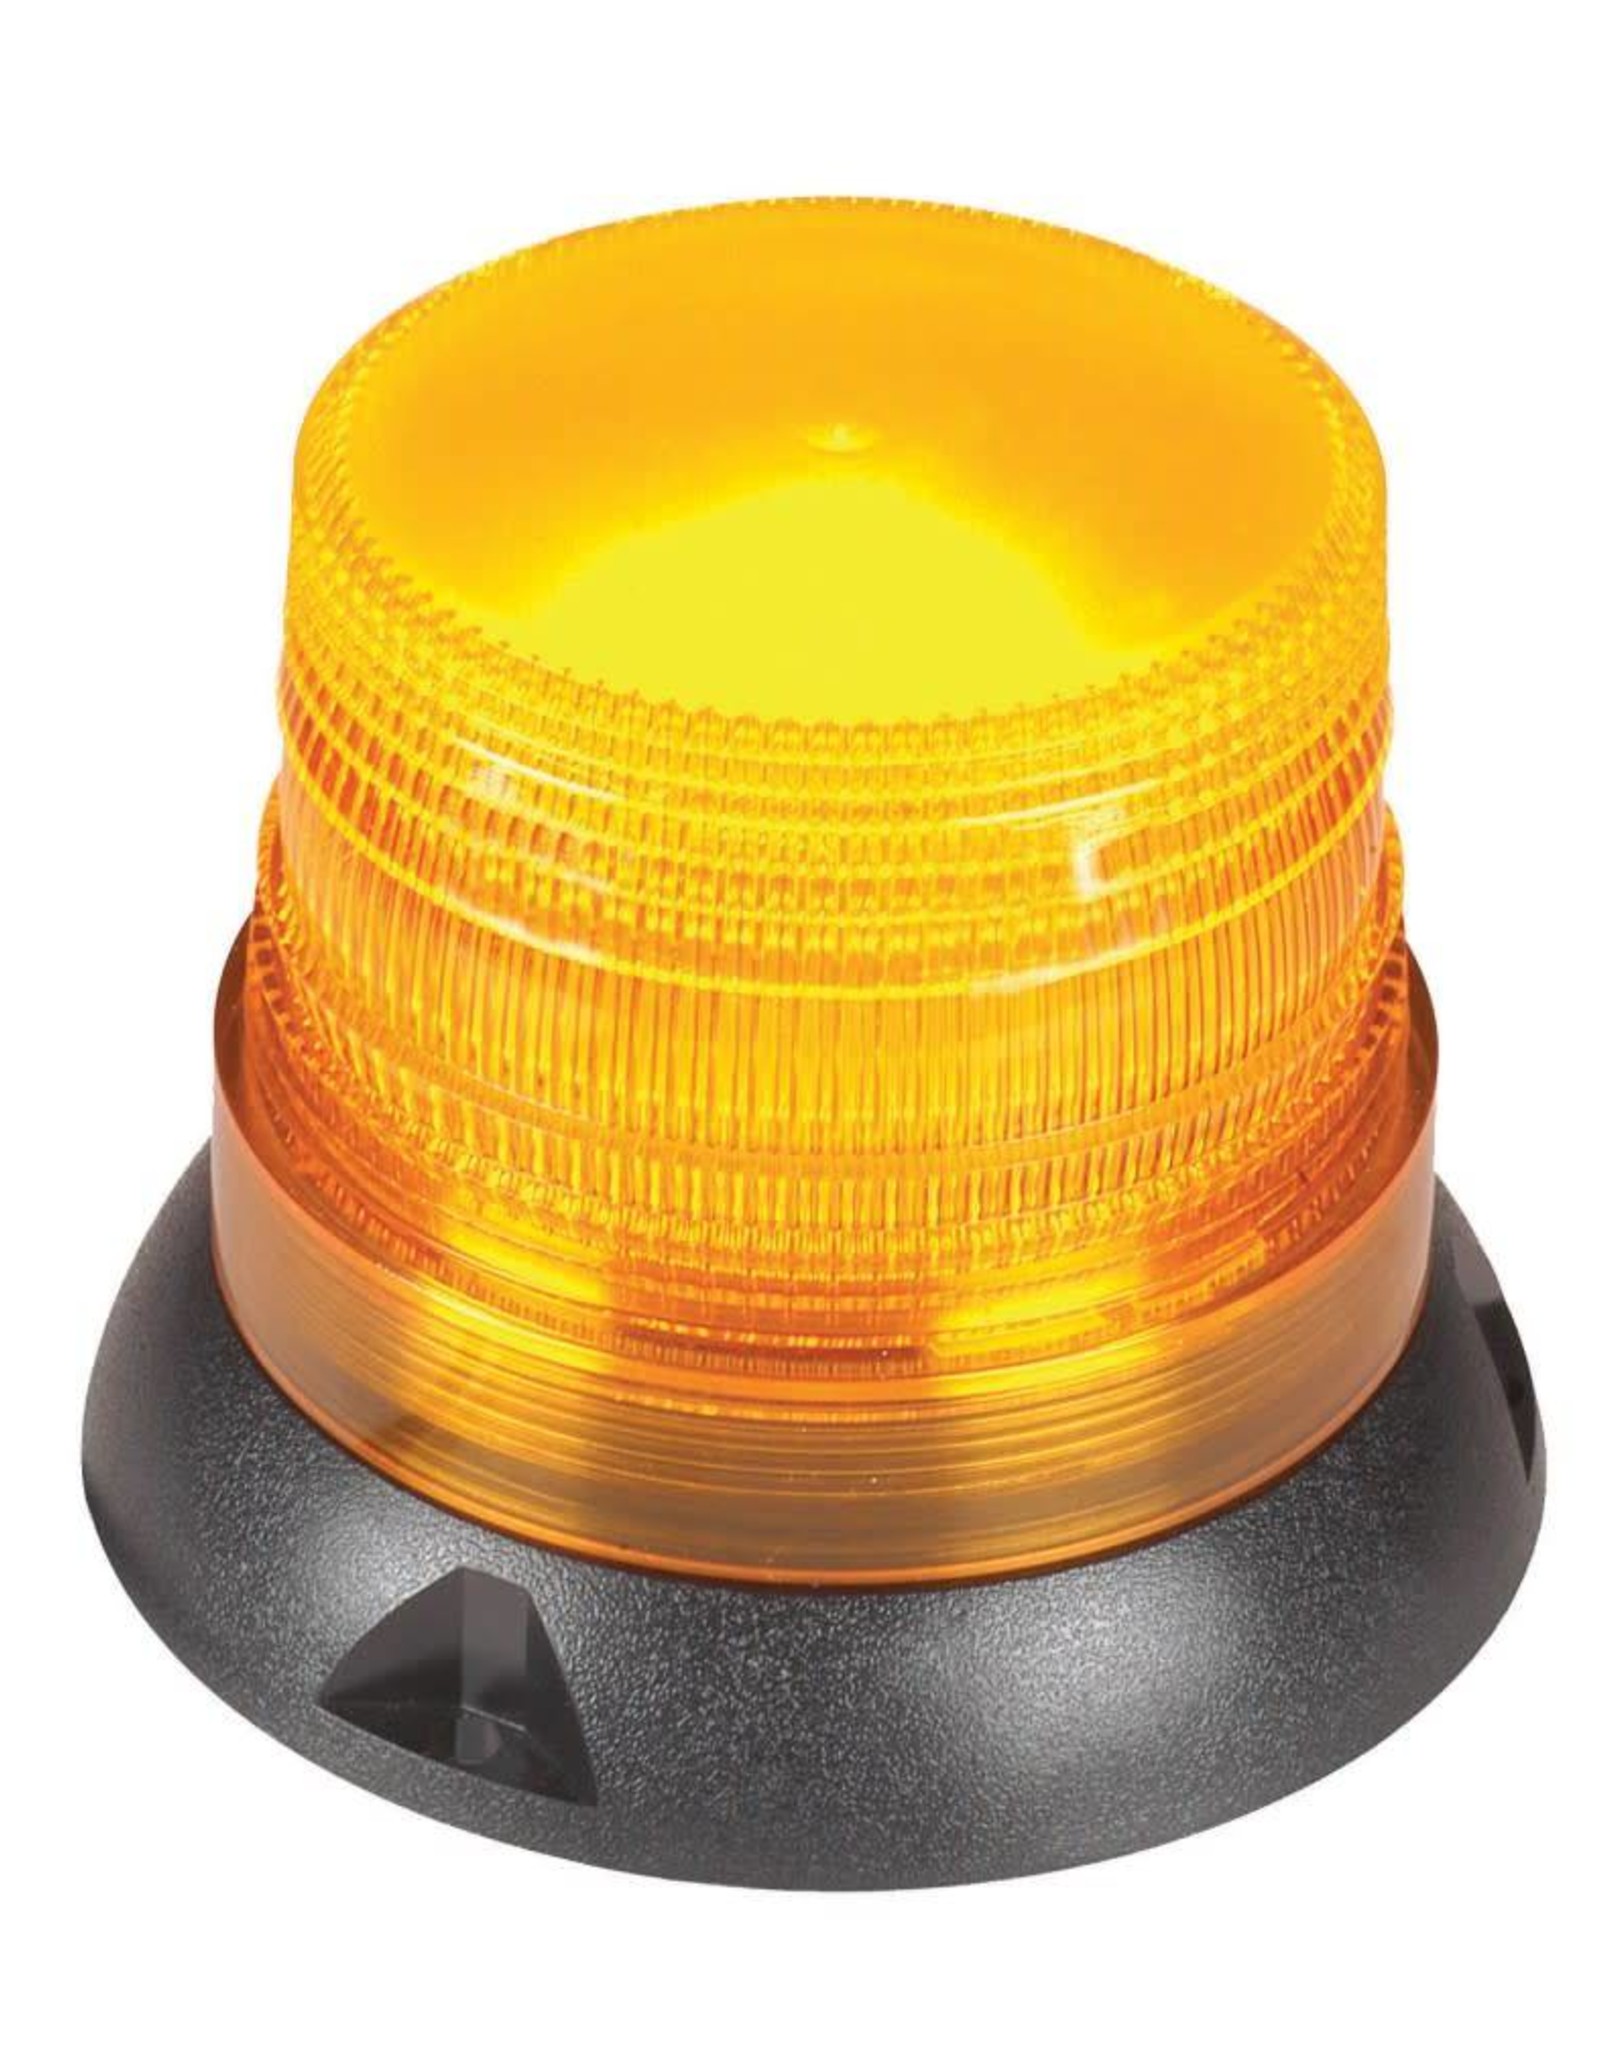 OnSite Safety On Site Safety Viper 12v Amber LED Warning Light